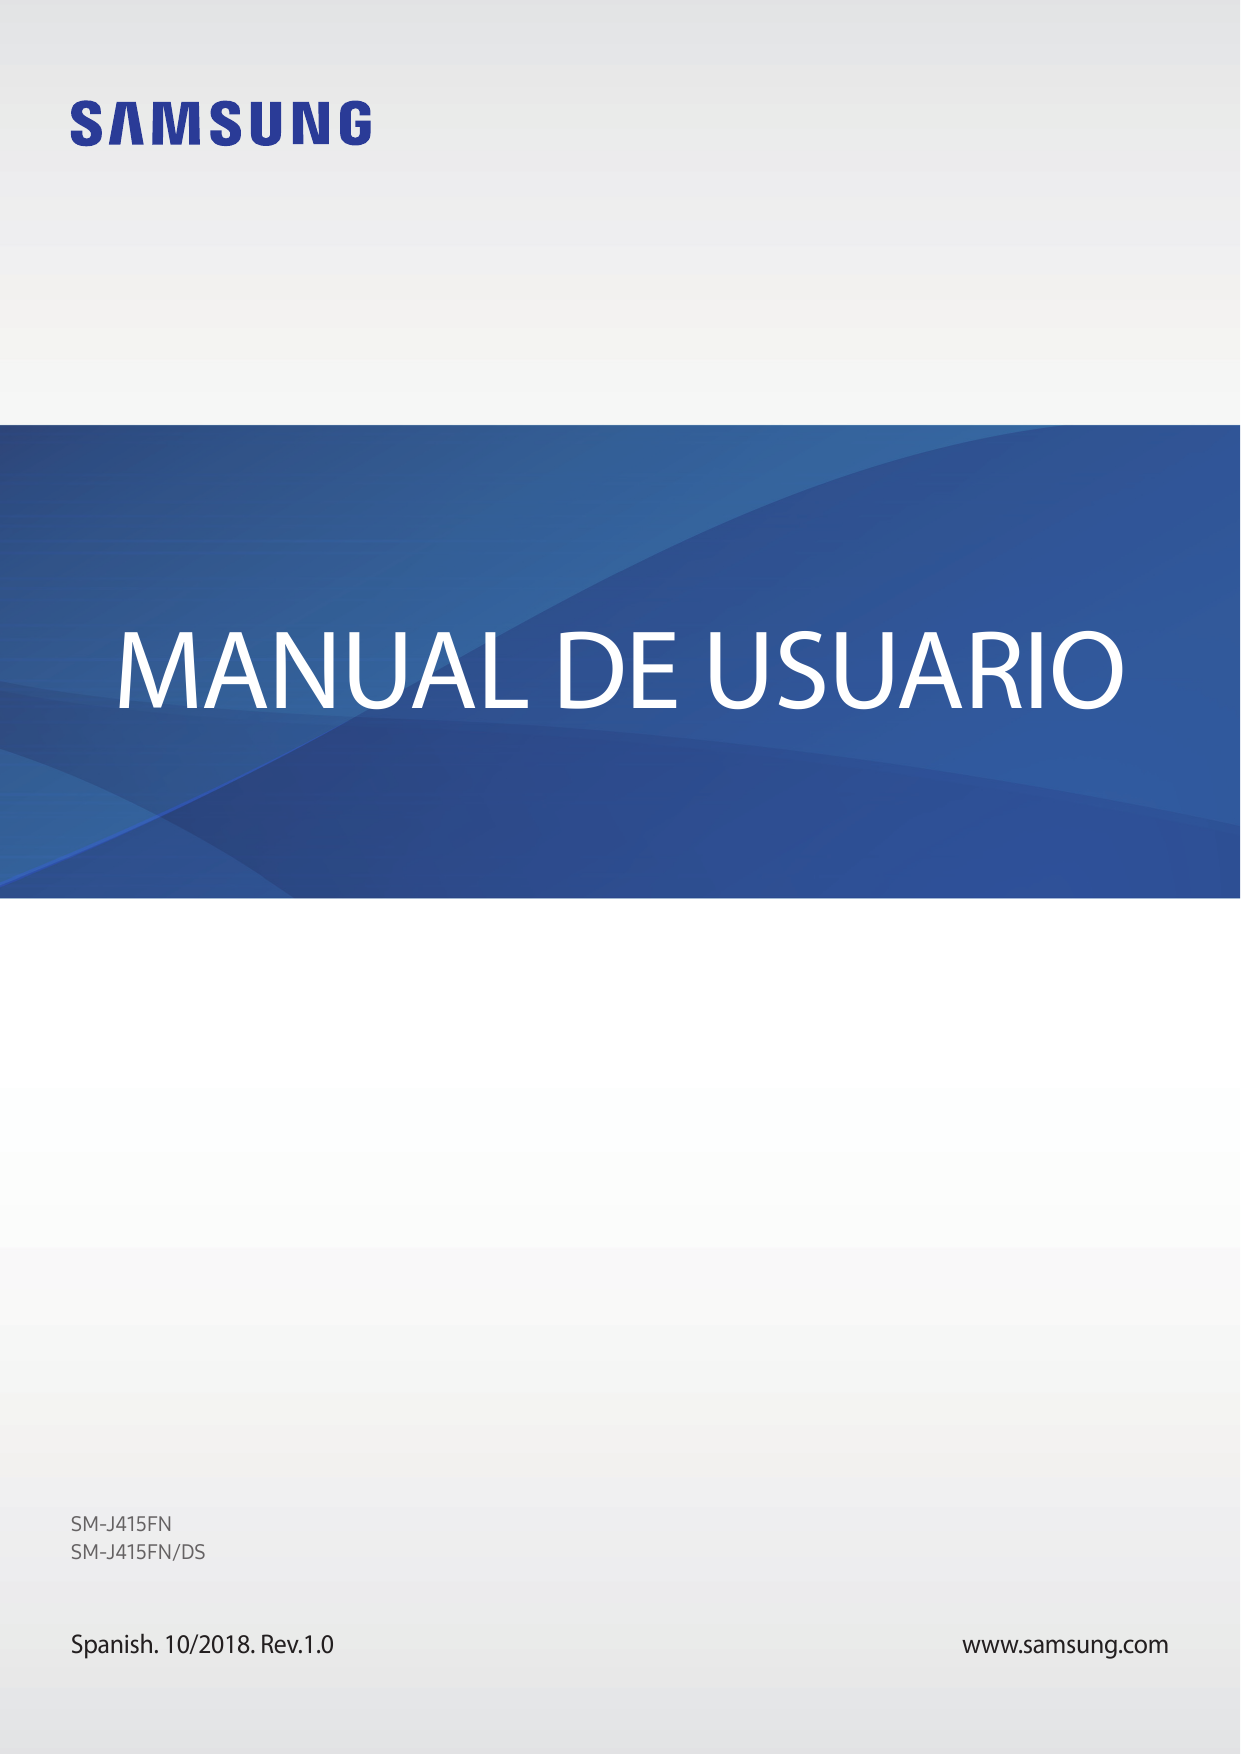 MANUAL DE USUARIOSM-J415FNSM-J415FN/DSSpanish. 10/2018. Rev.1.0www.samsung.com